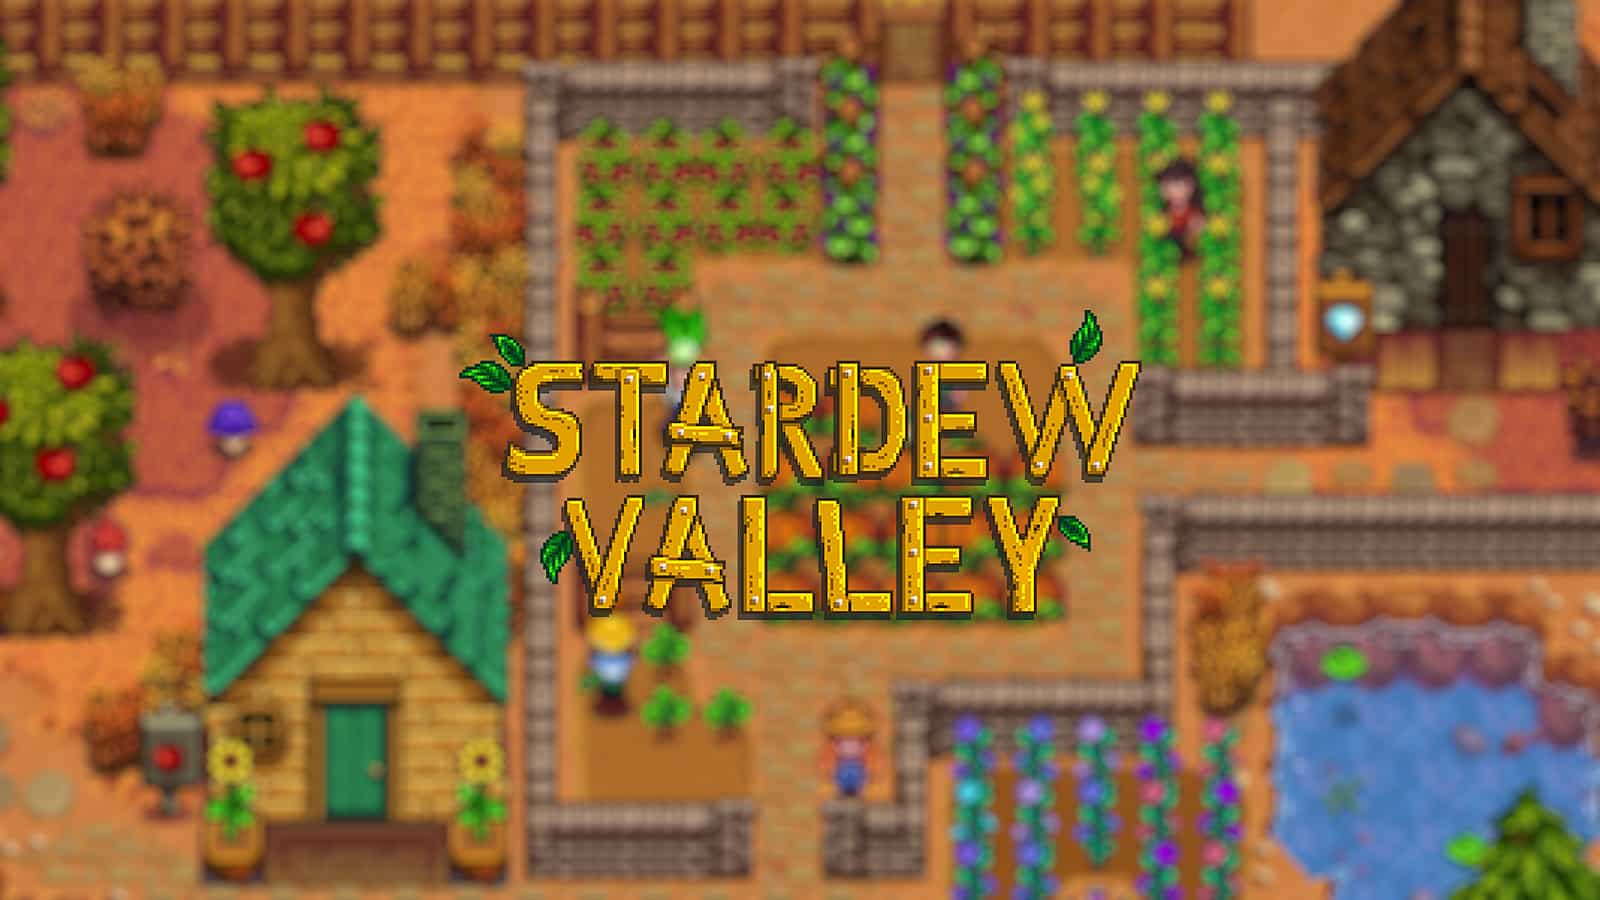 Stardew Valley cross platform multiplayer